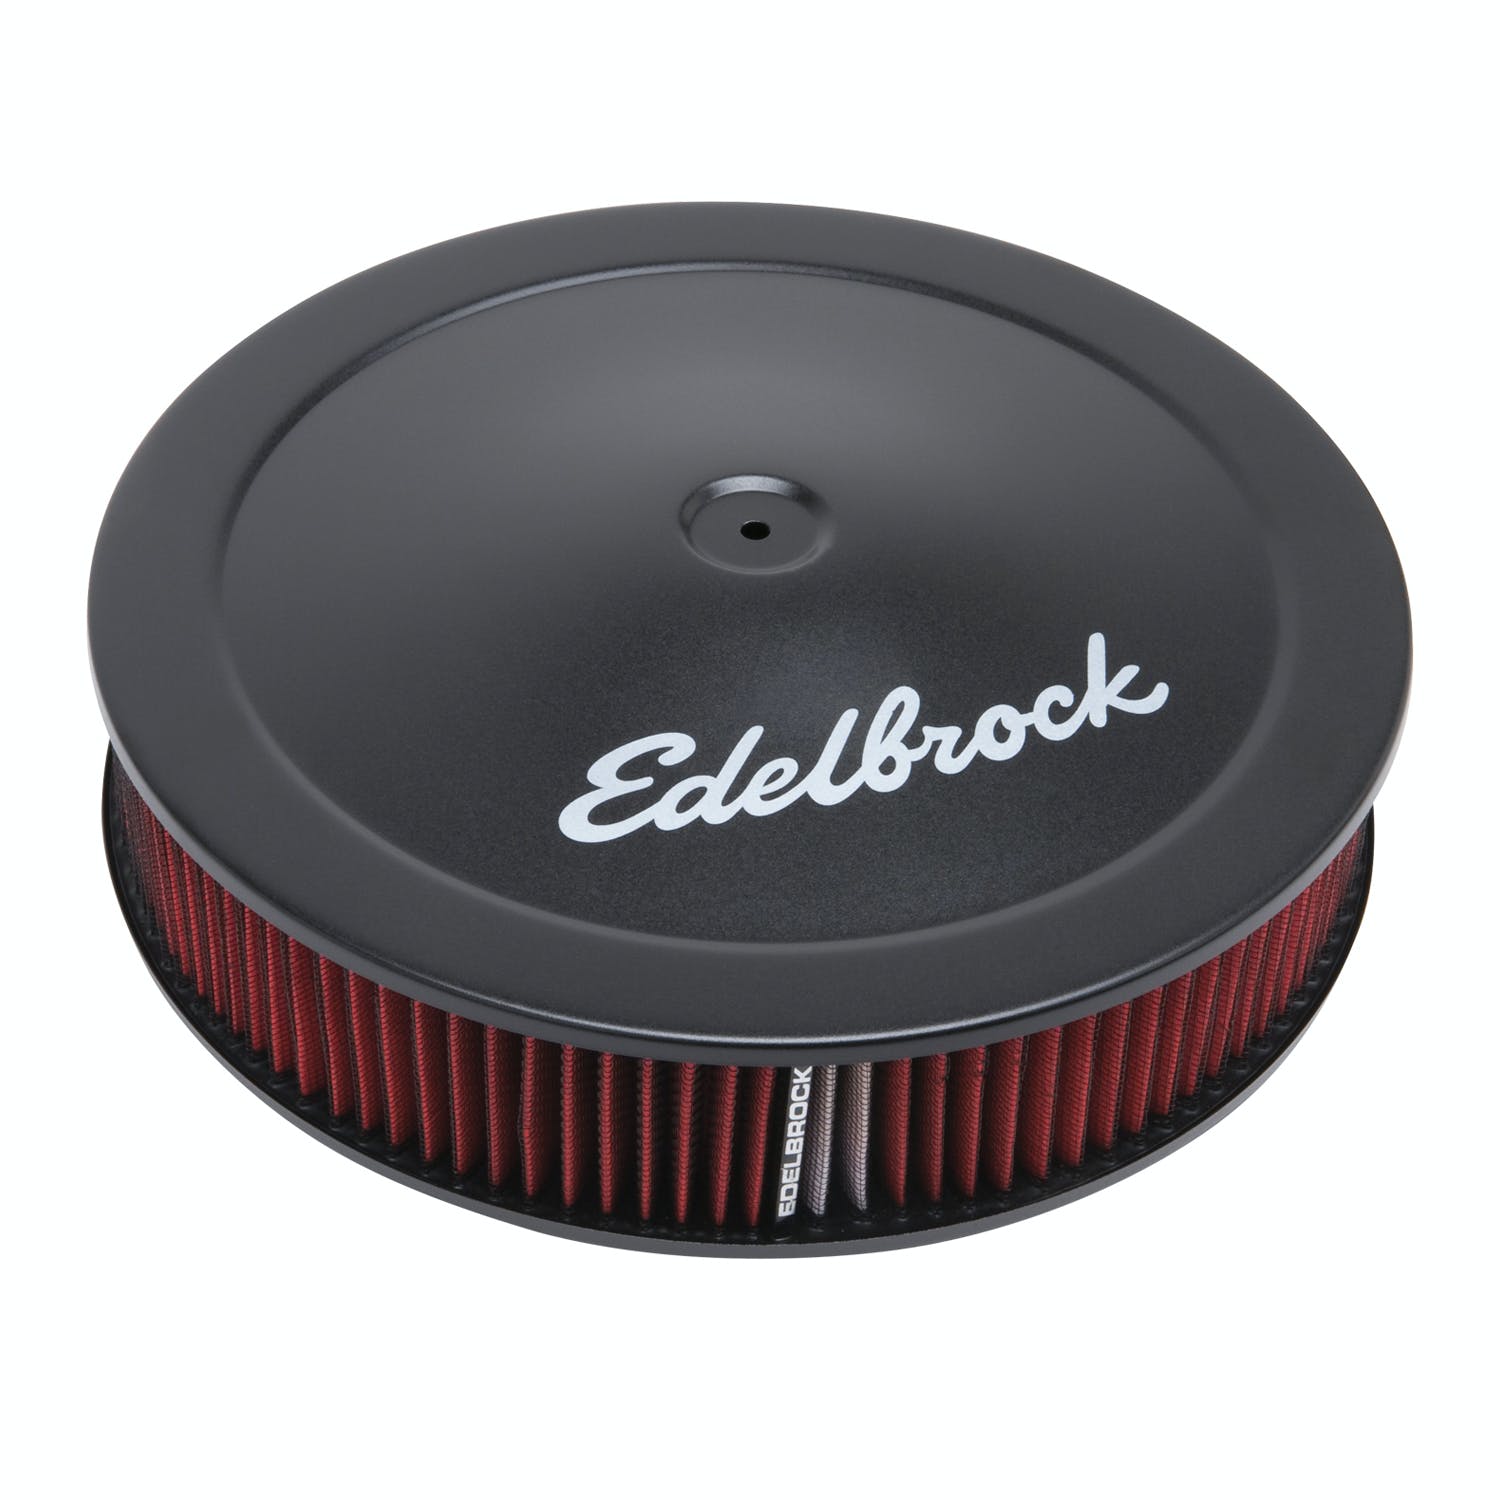 Edelbrock 1225 Pro-Flo Black 14 Round Air Cleaner with 3 Cotton Element (Deep Flange)